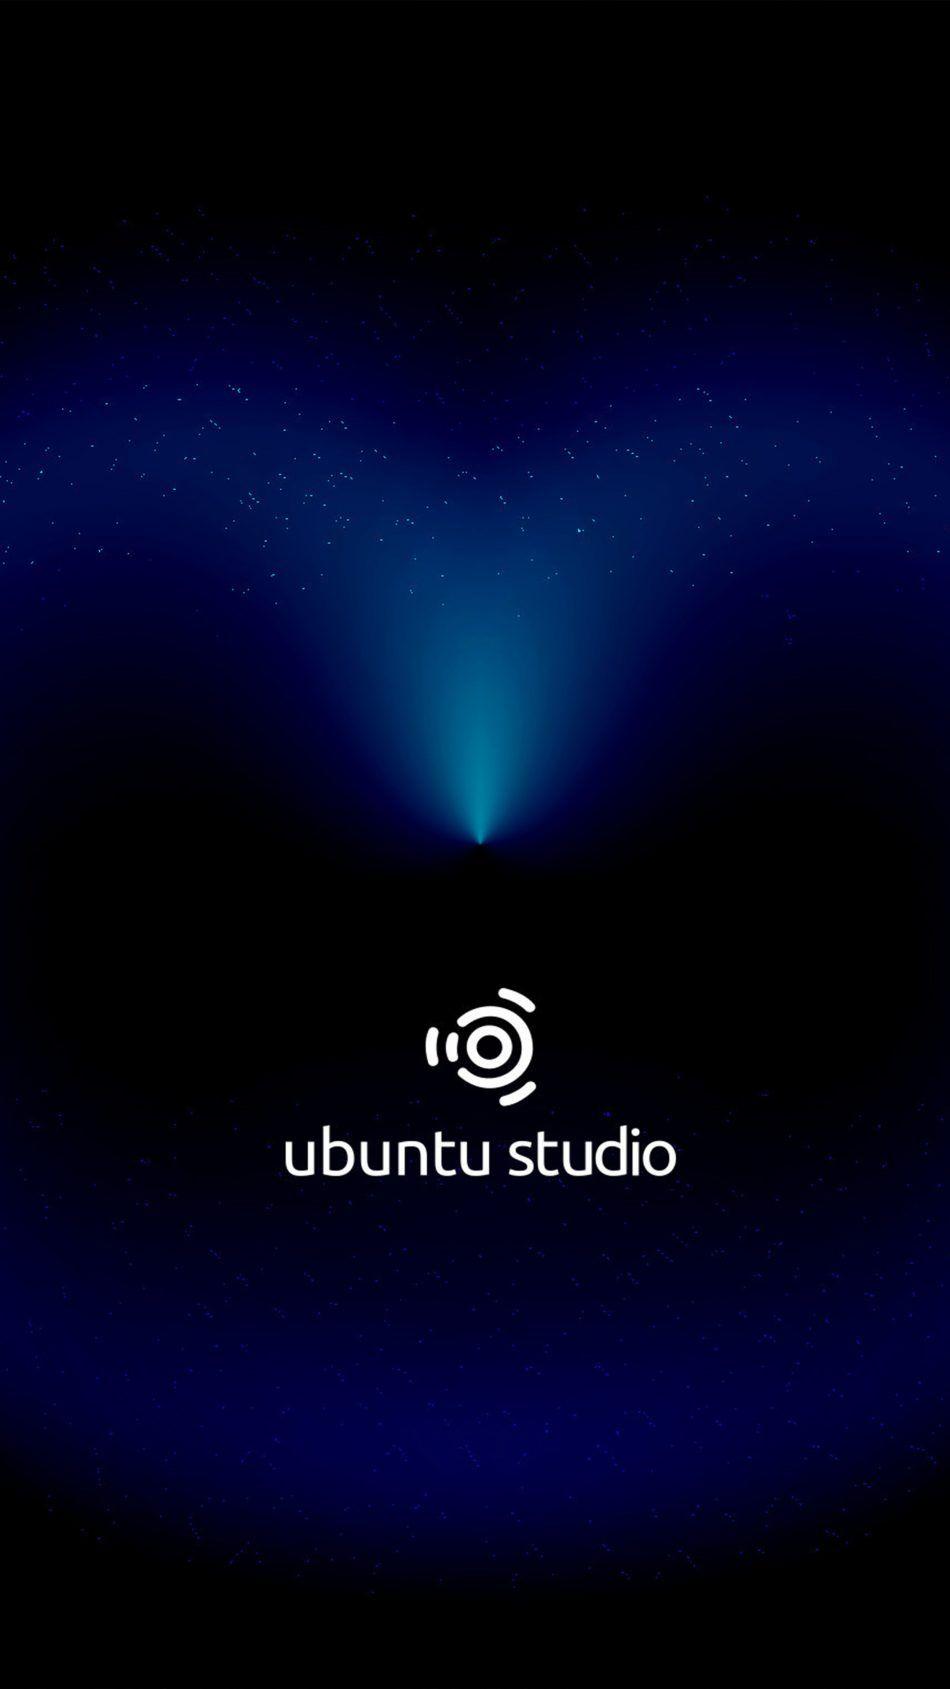 Ubuntu Studio Dark Cosmic Black Free 4K Ultra HD Mobile